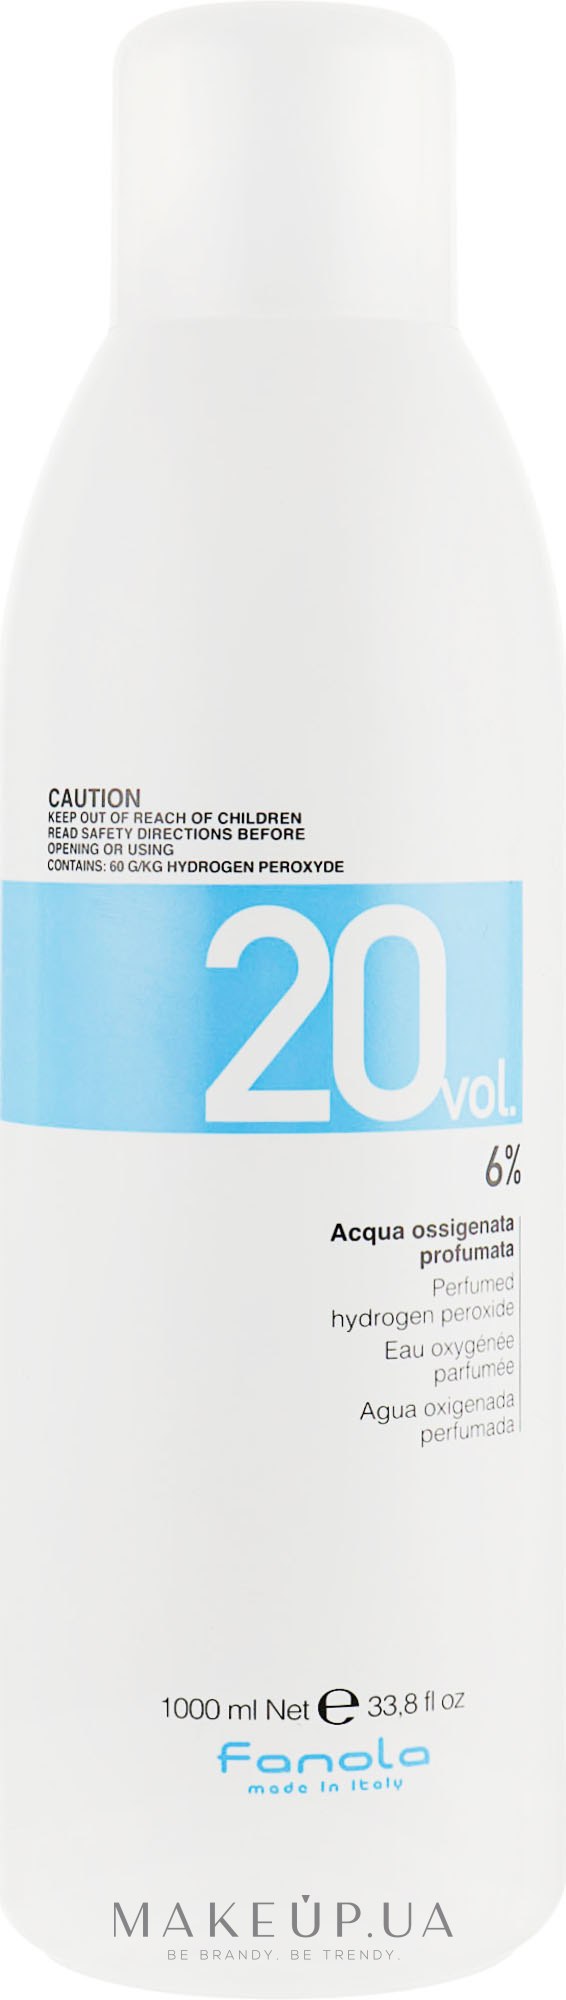 Окислитель 20 vol 6% - Fanola Perfumed Hydrogen Peroxide Hair Oxidant  — фото 1000ml